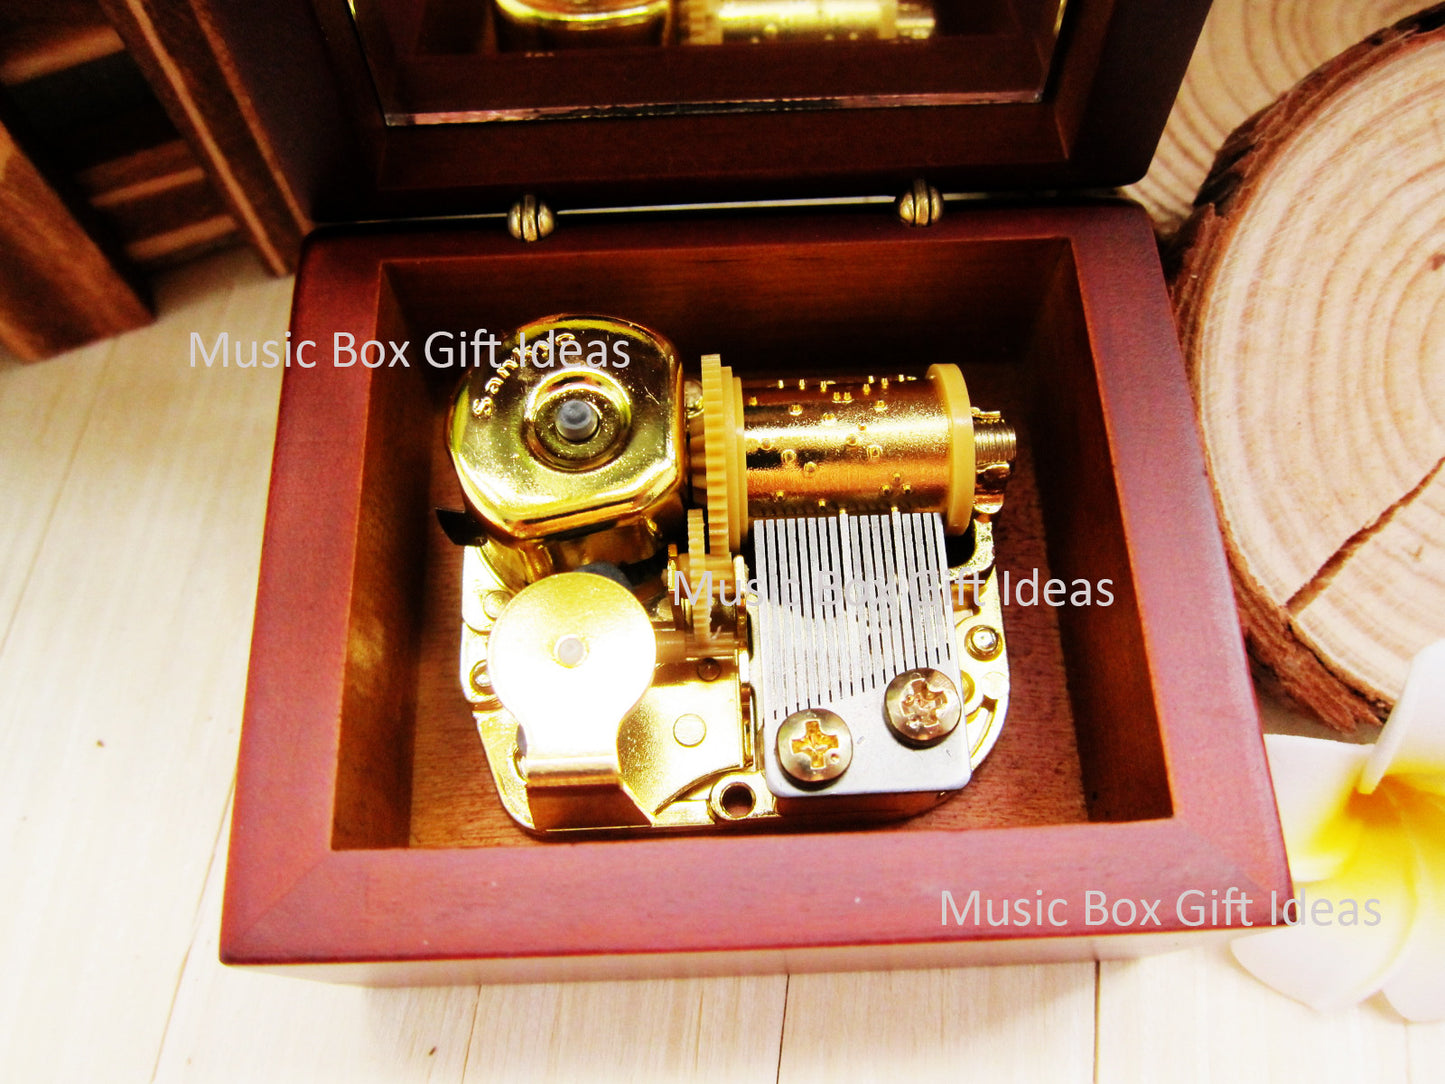 The Secret World of Arrietty Summertime from Studio Ghibli 18-Note Music Box Gift (Wooden Clockwork) - Music Box Gift Ideas